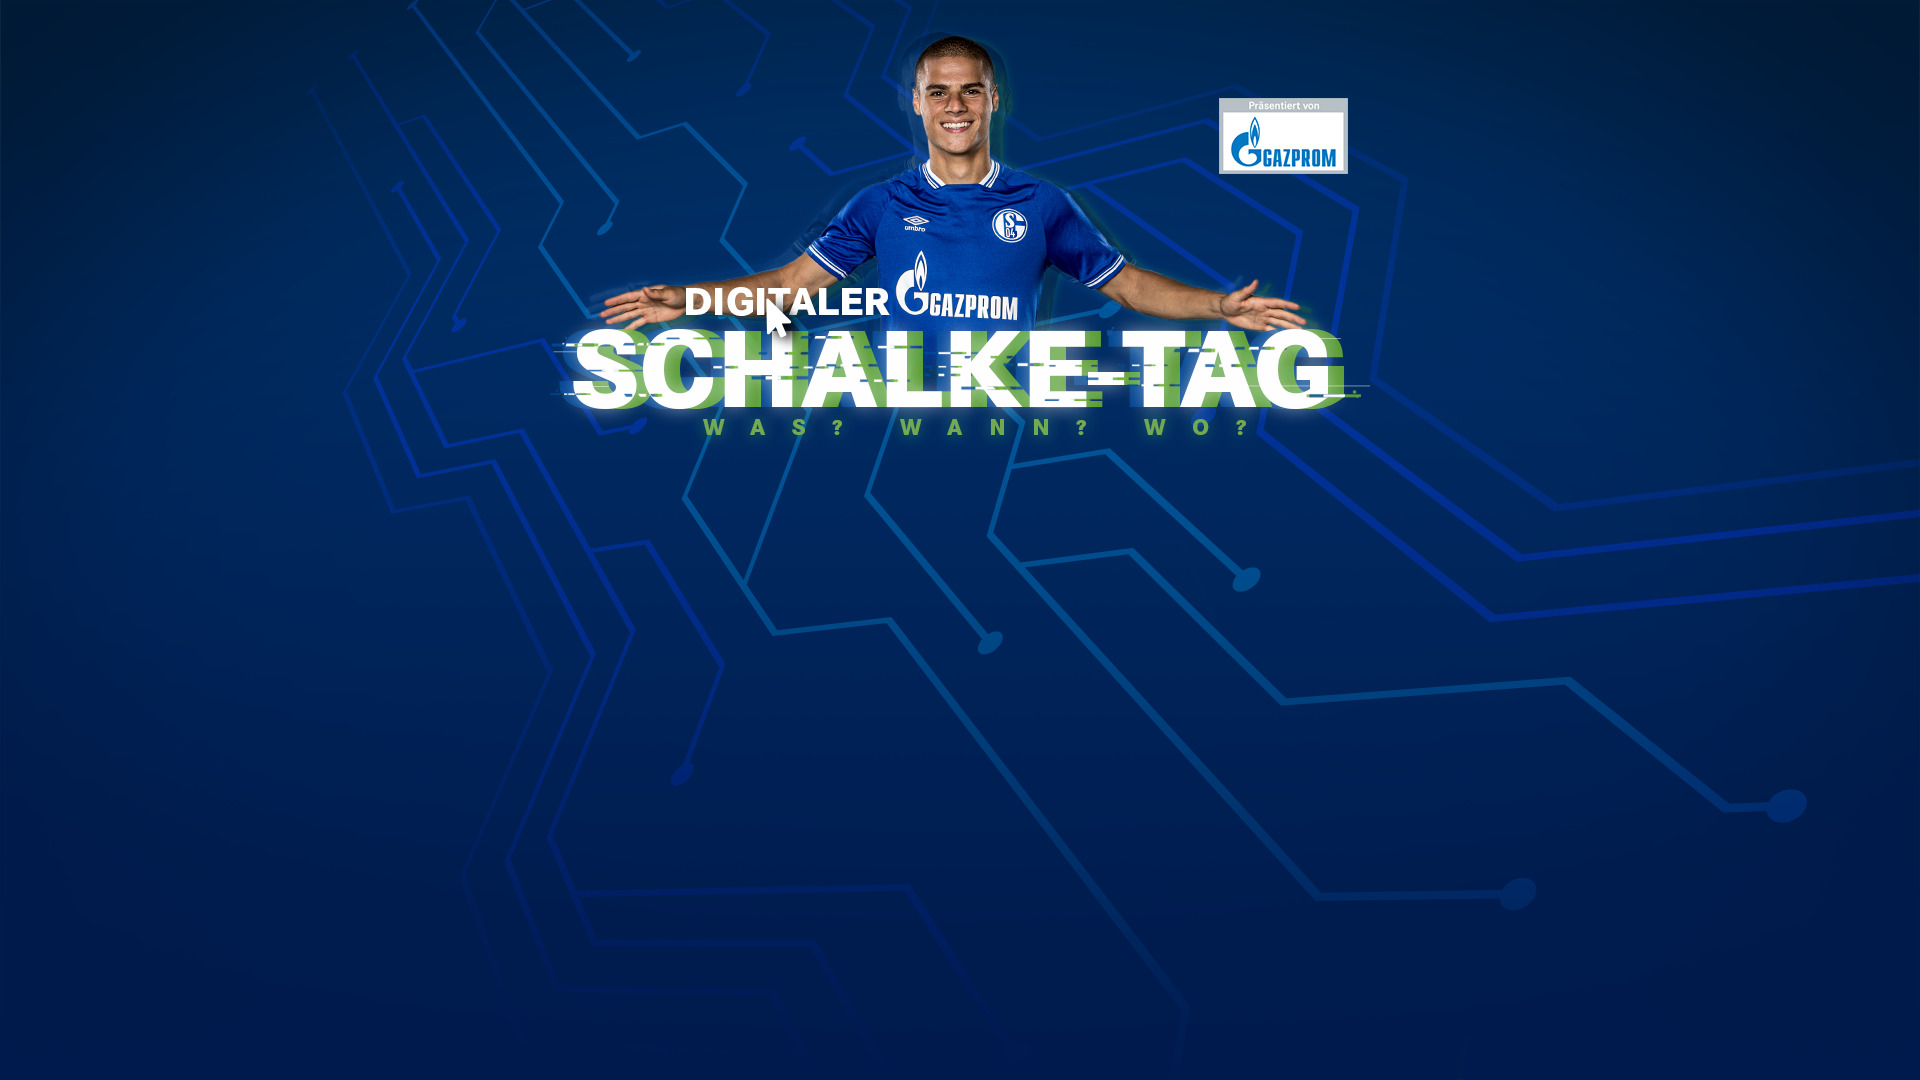 Schalke-Tag 2020